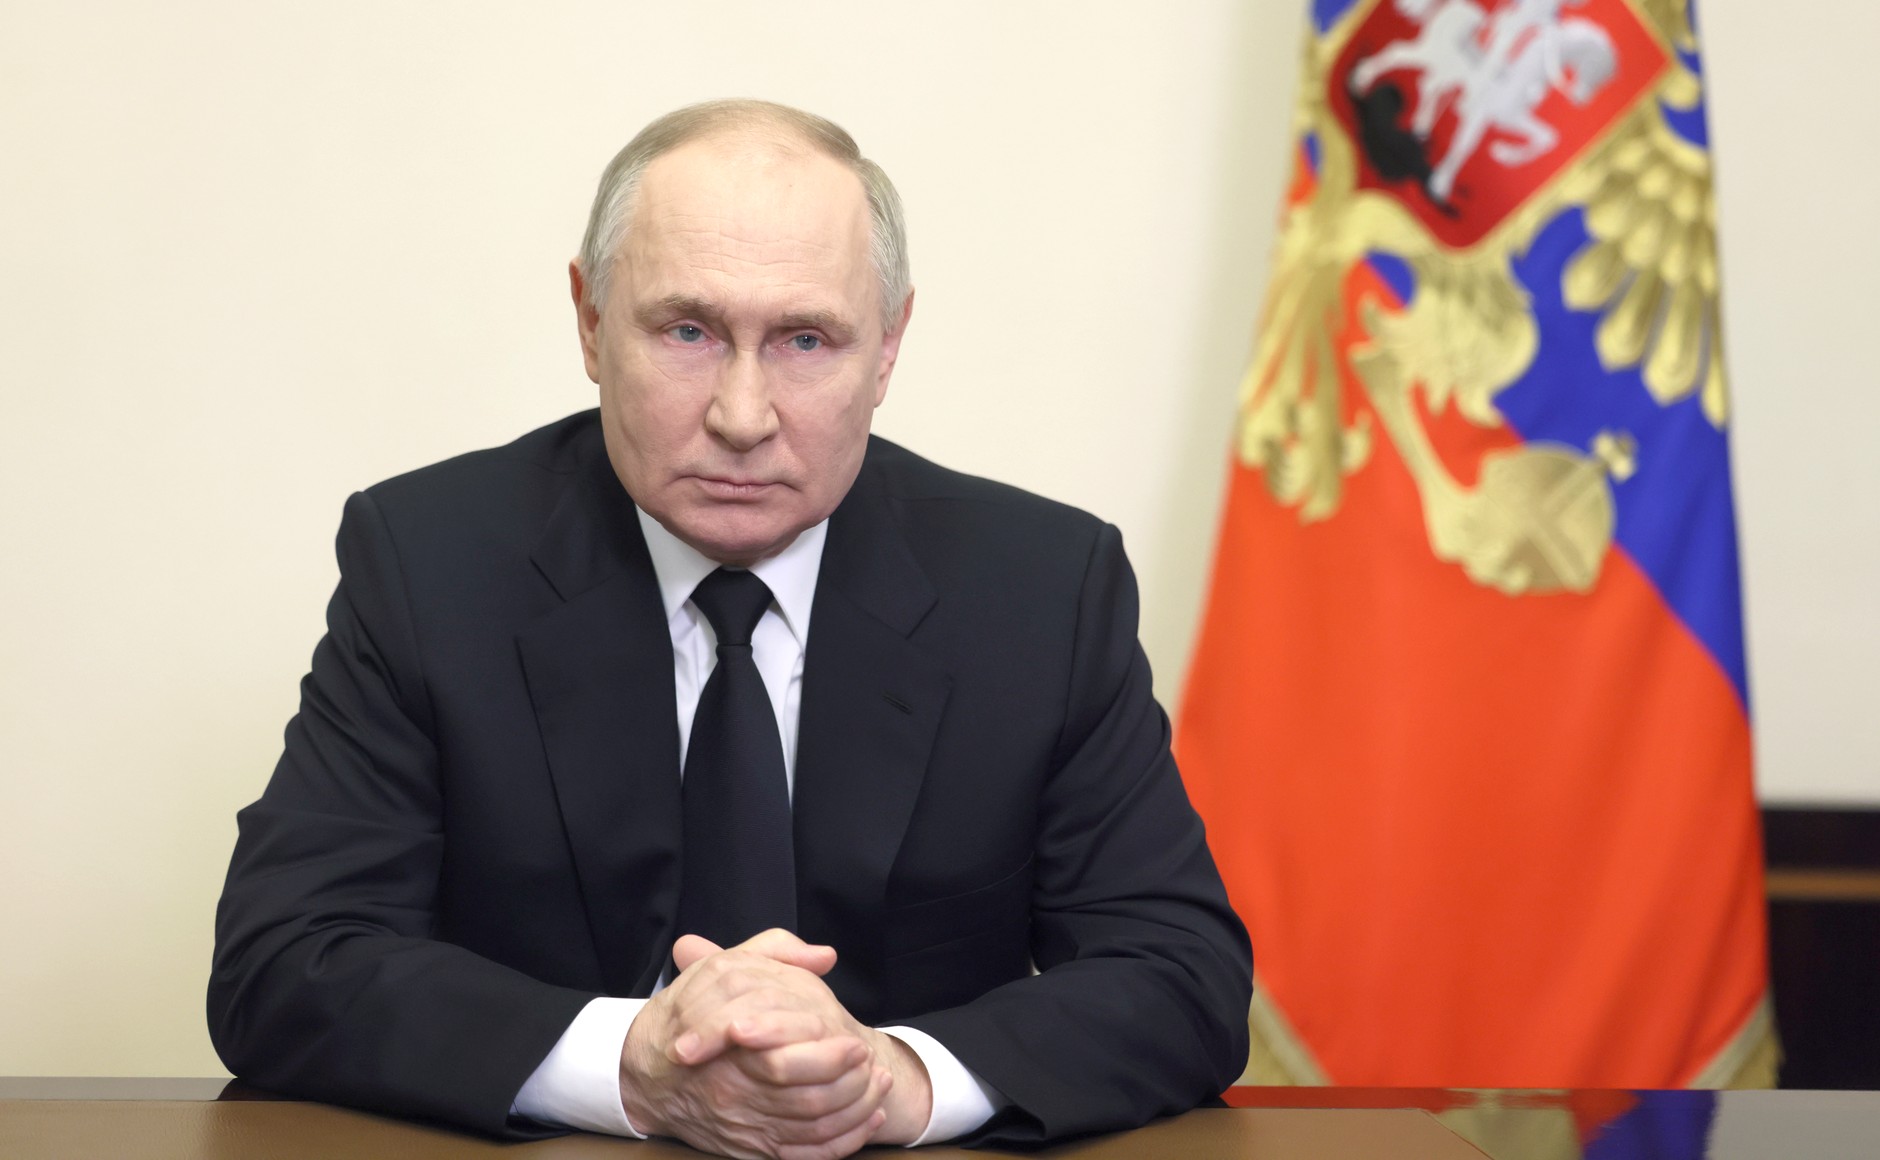 Putin speech Image kremlin.ru